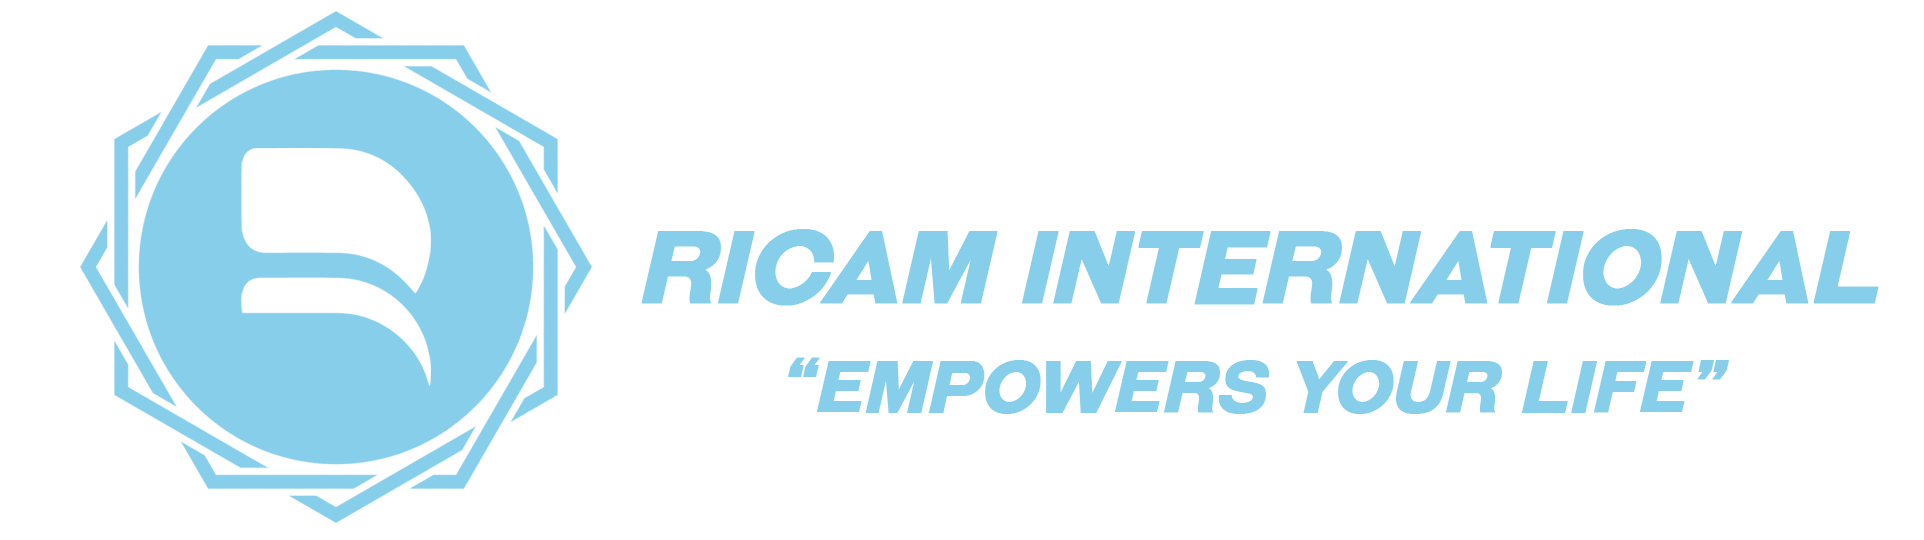 Ricam International